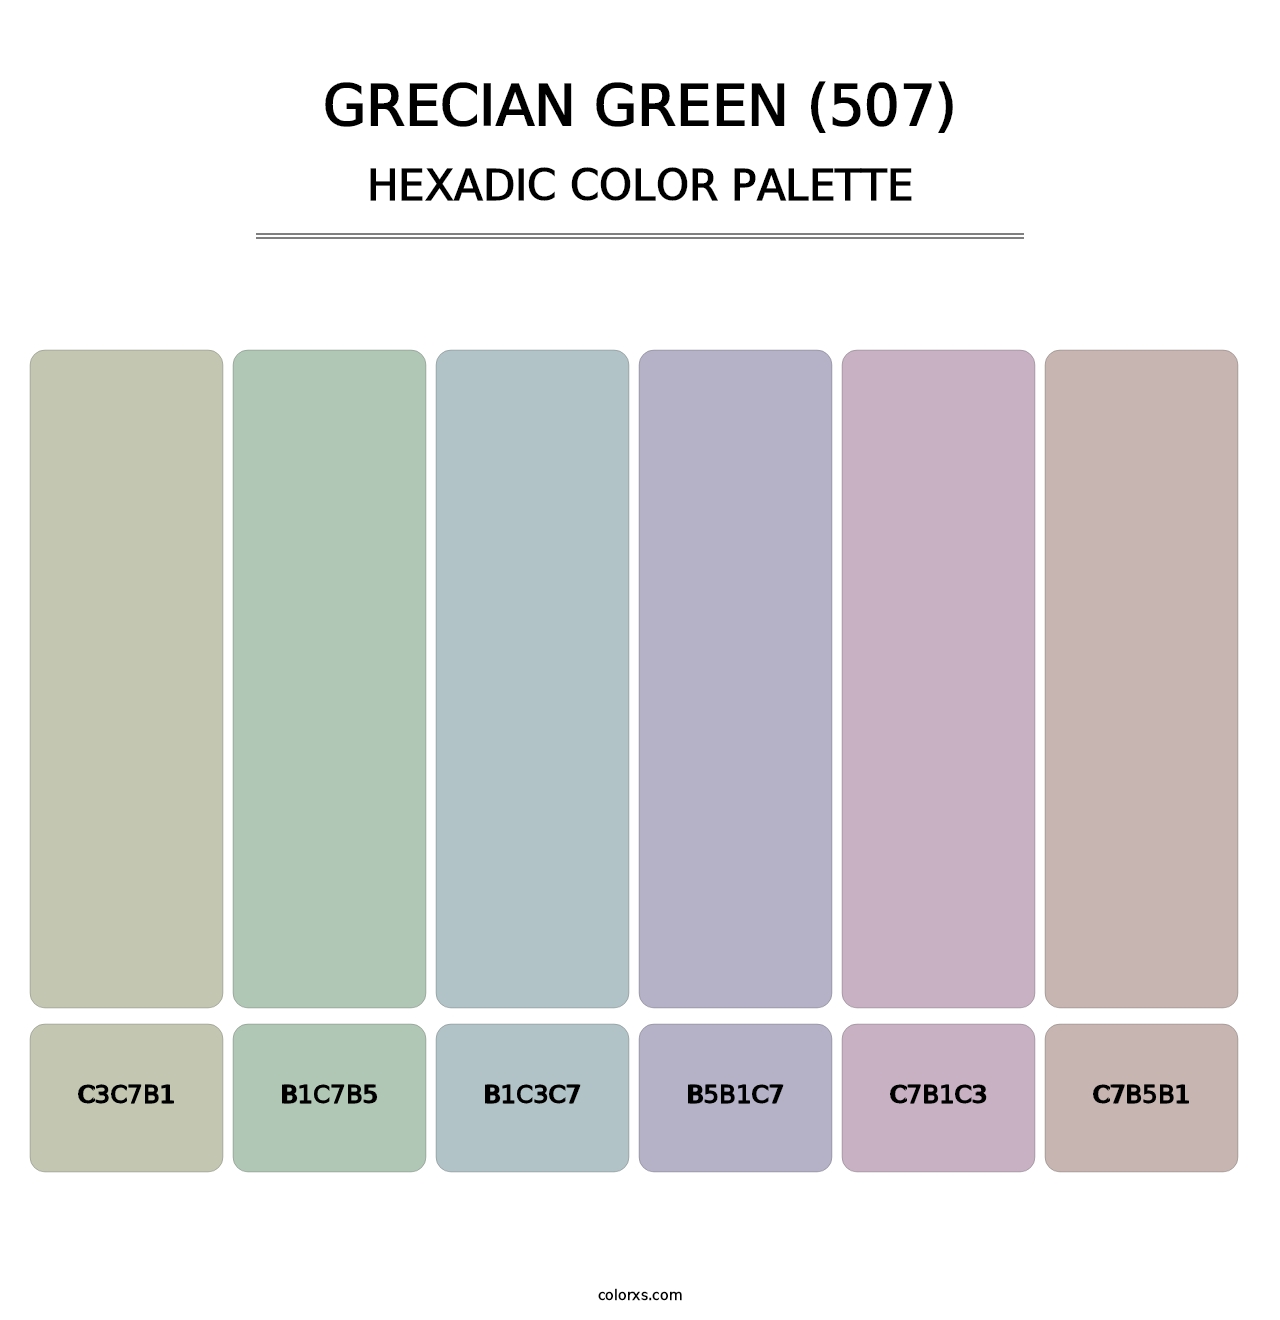 Grecian Green (507) - Hexadic Color Palette